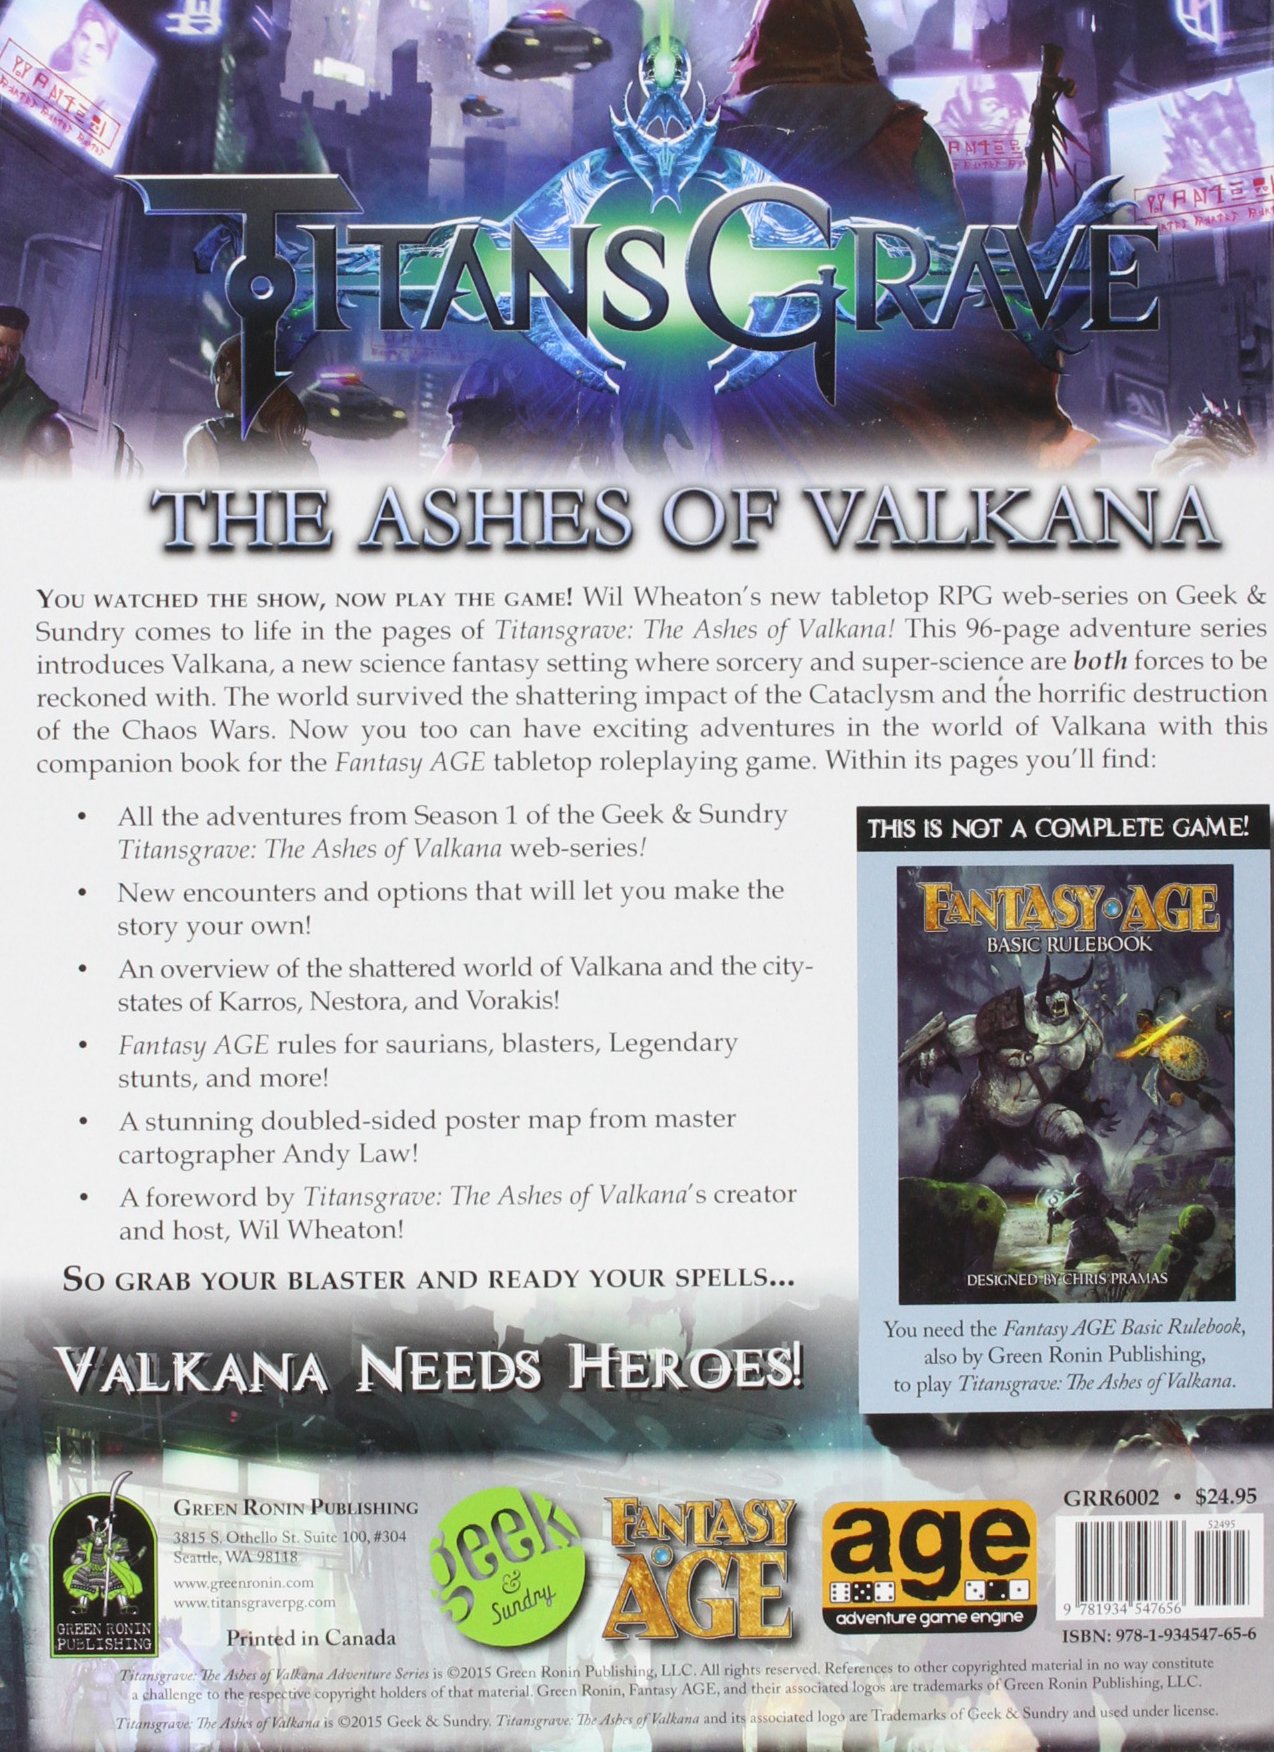 Titansgrave world of valkana